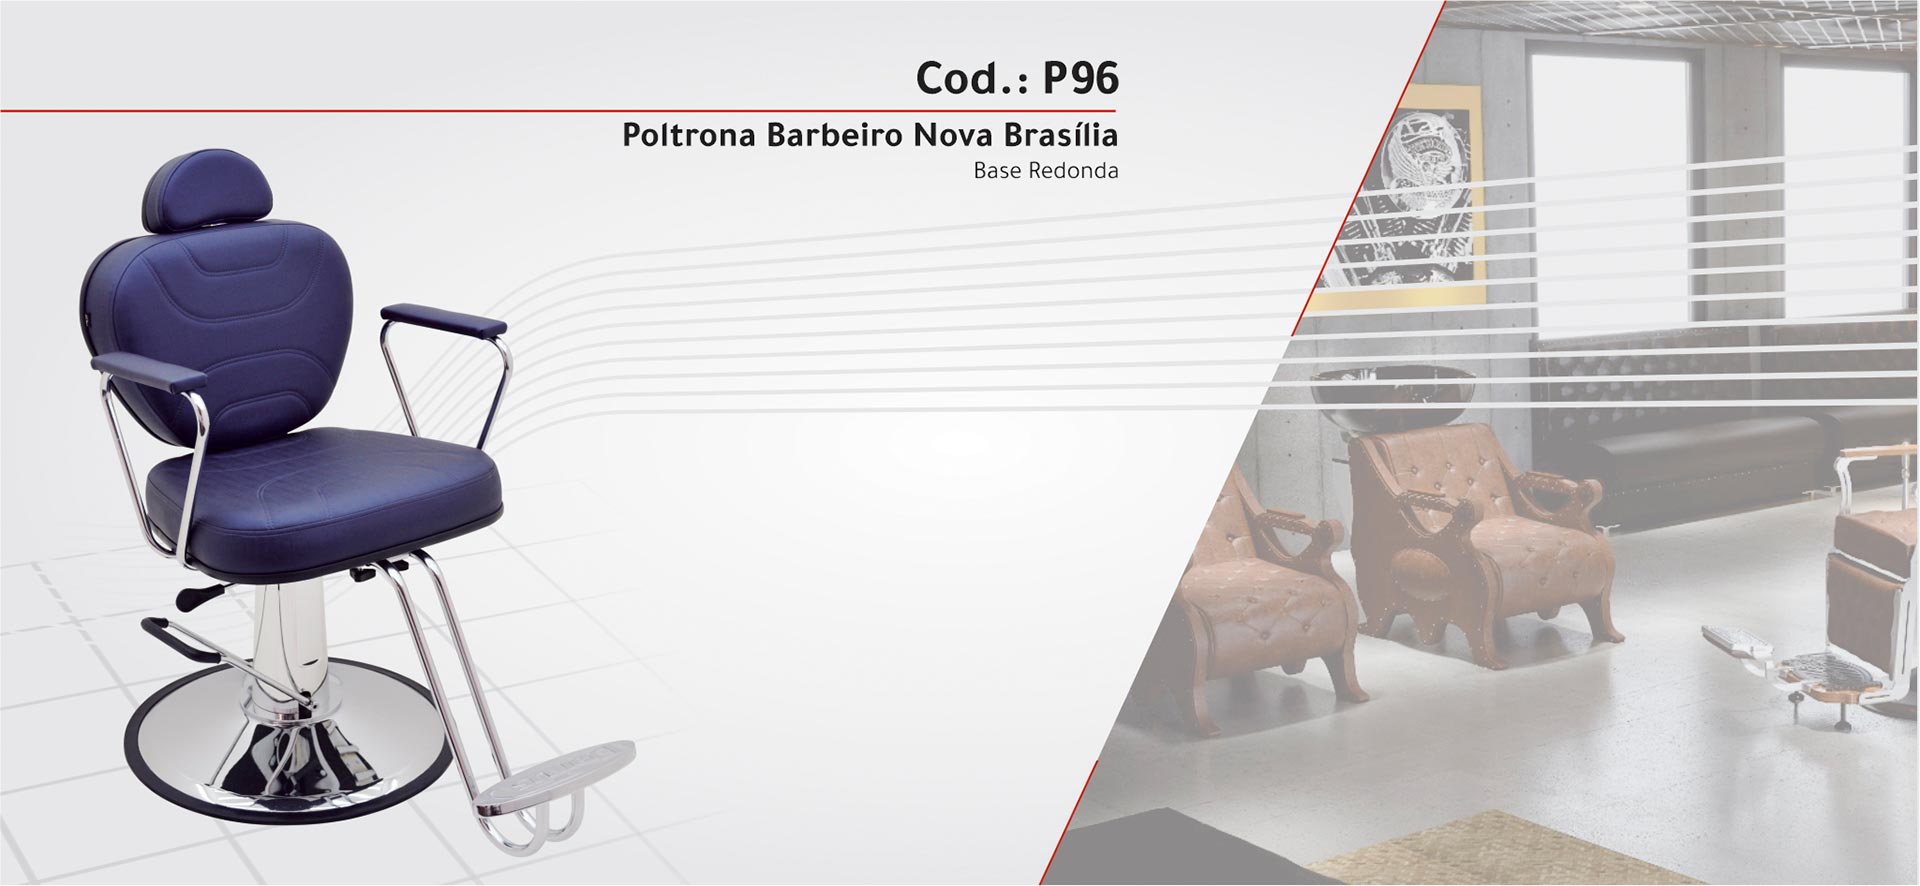 P96 - Poltrona Hidráulica Barbeiro Nova Brasília Base Redonda